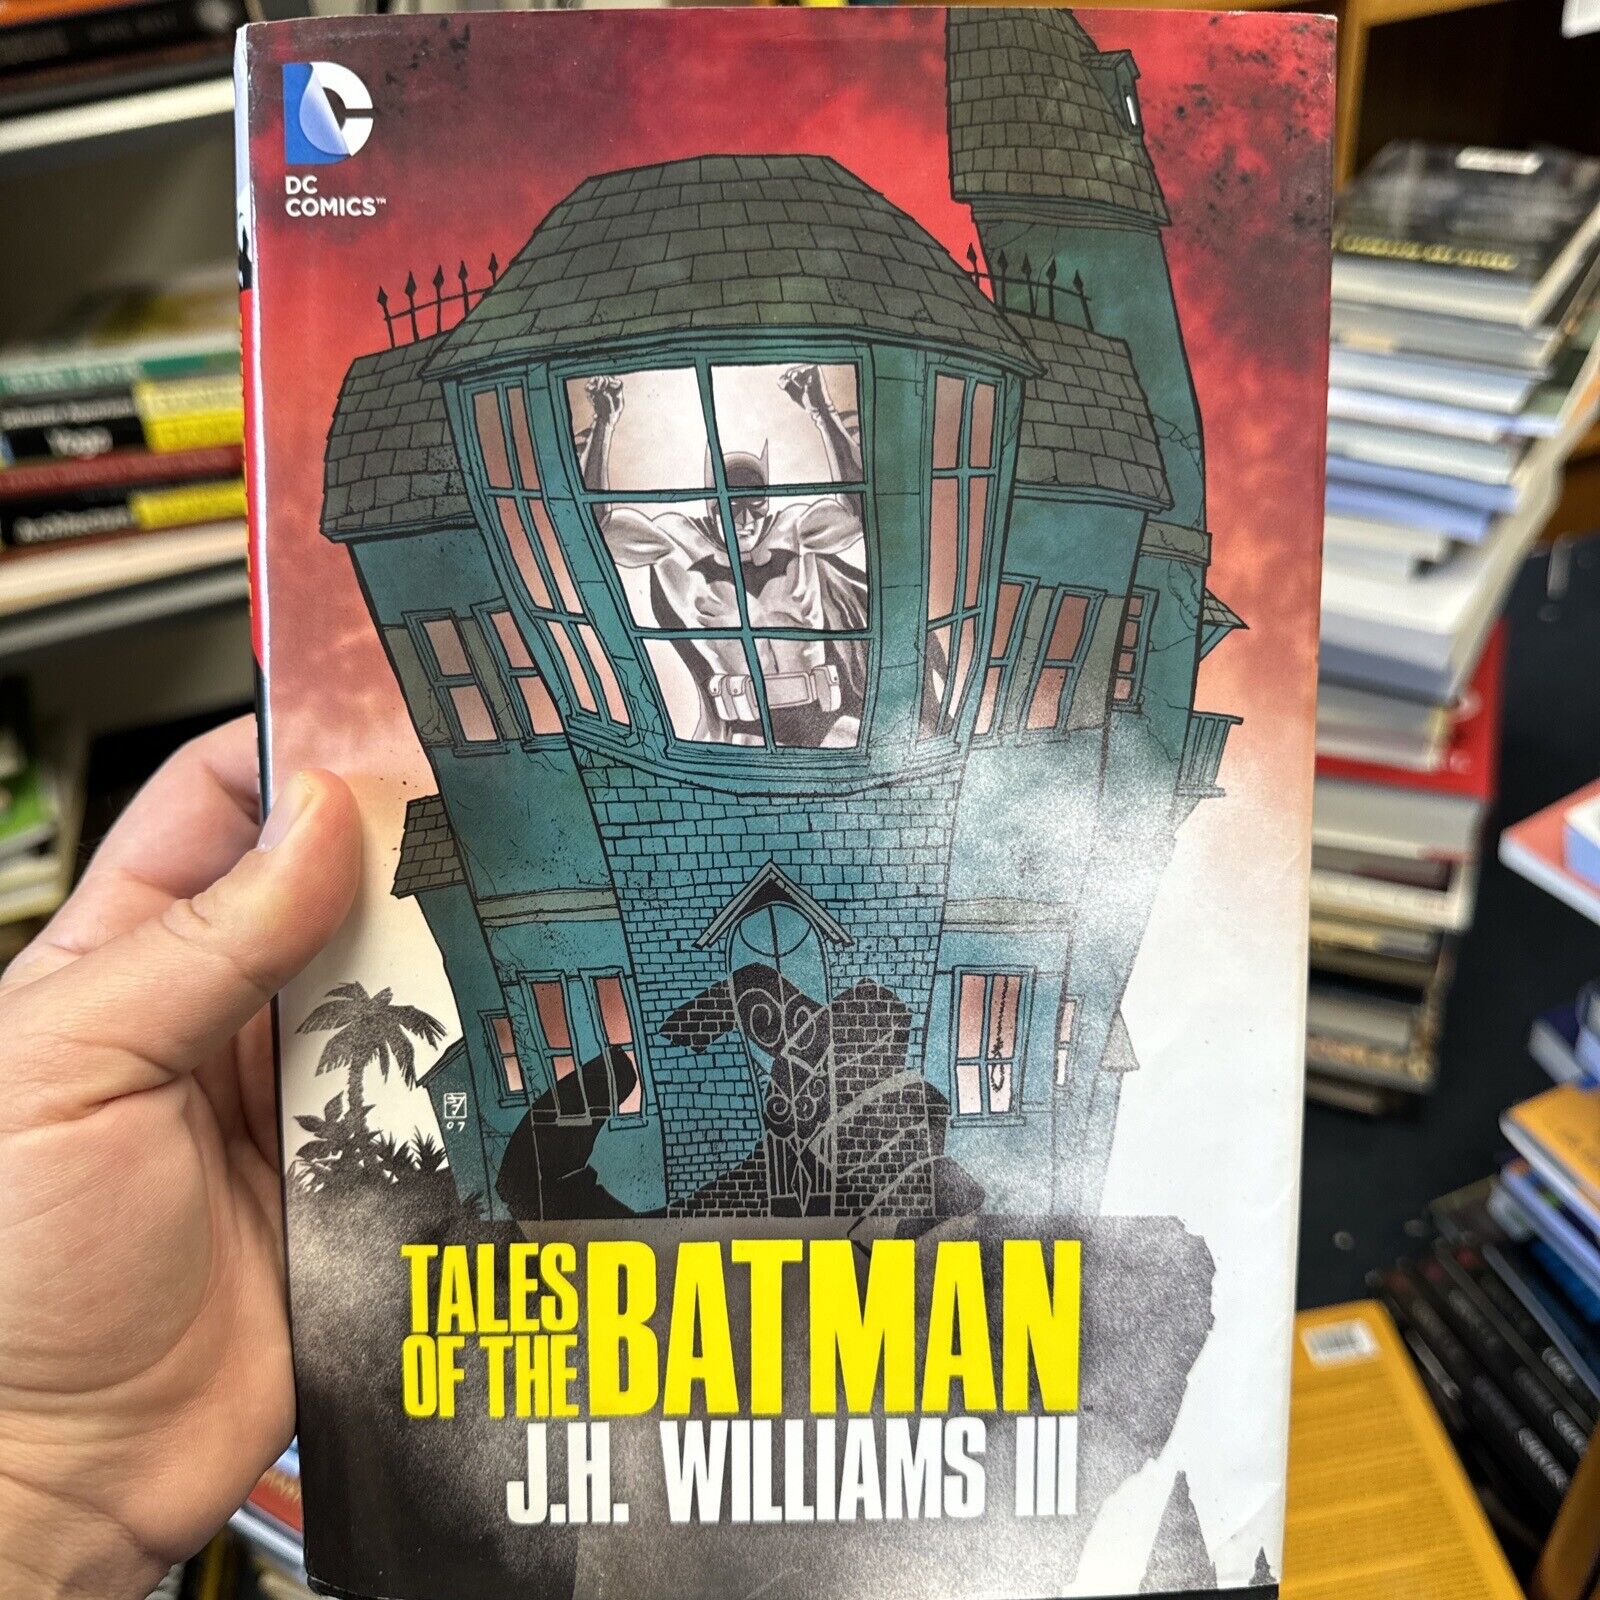 Tales of the Batman: J.H. Williams III (DC Comics September 2014)